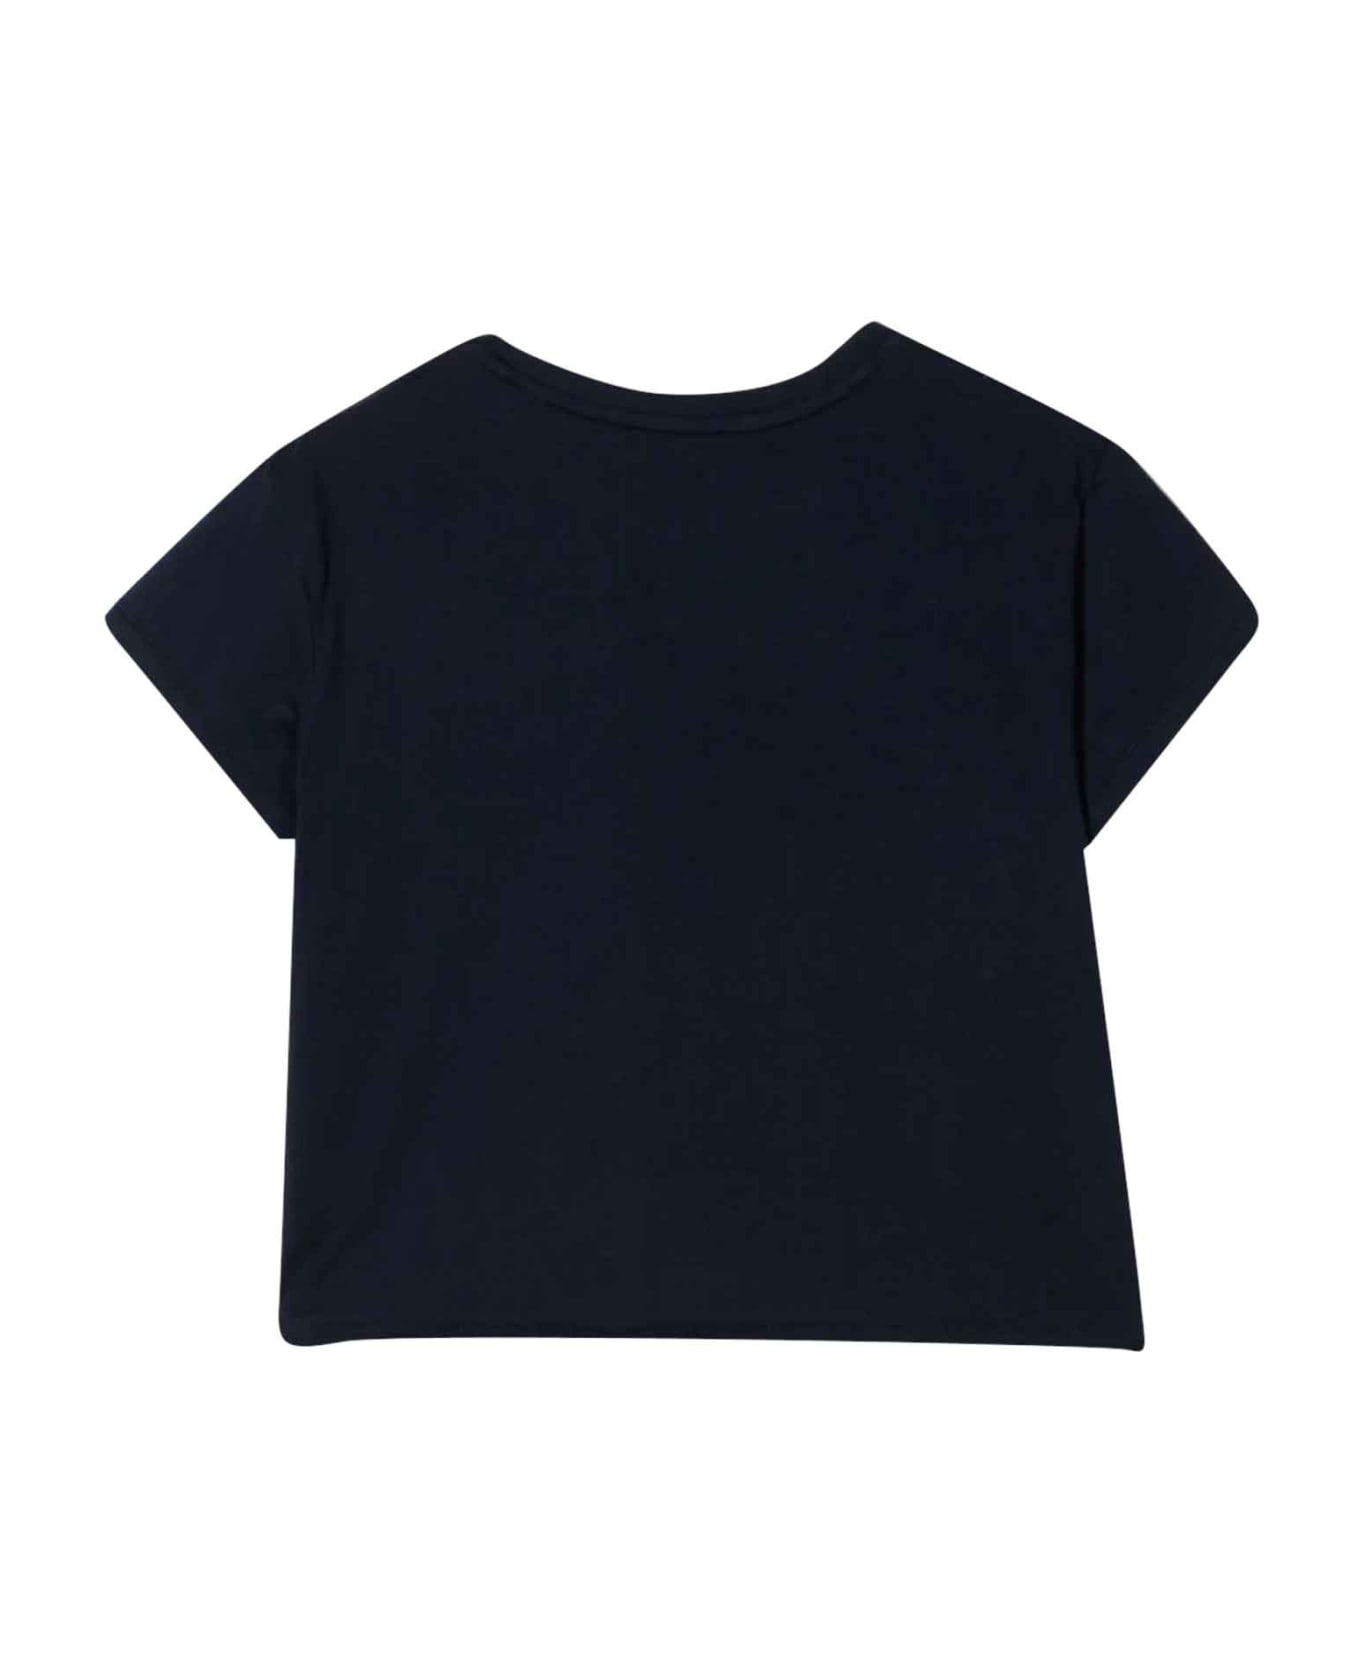 Michael Kors Blue T-shirt Girl - NAVY